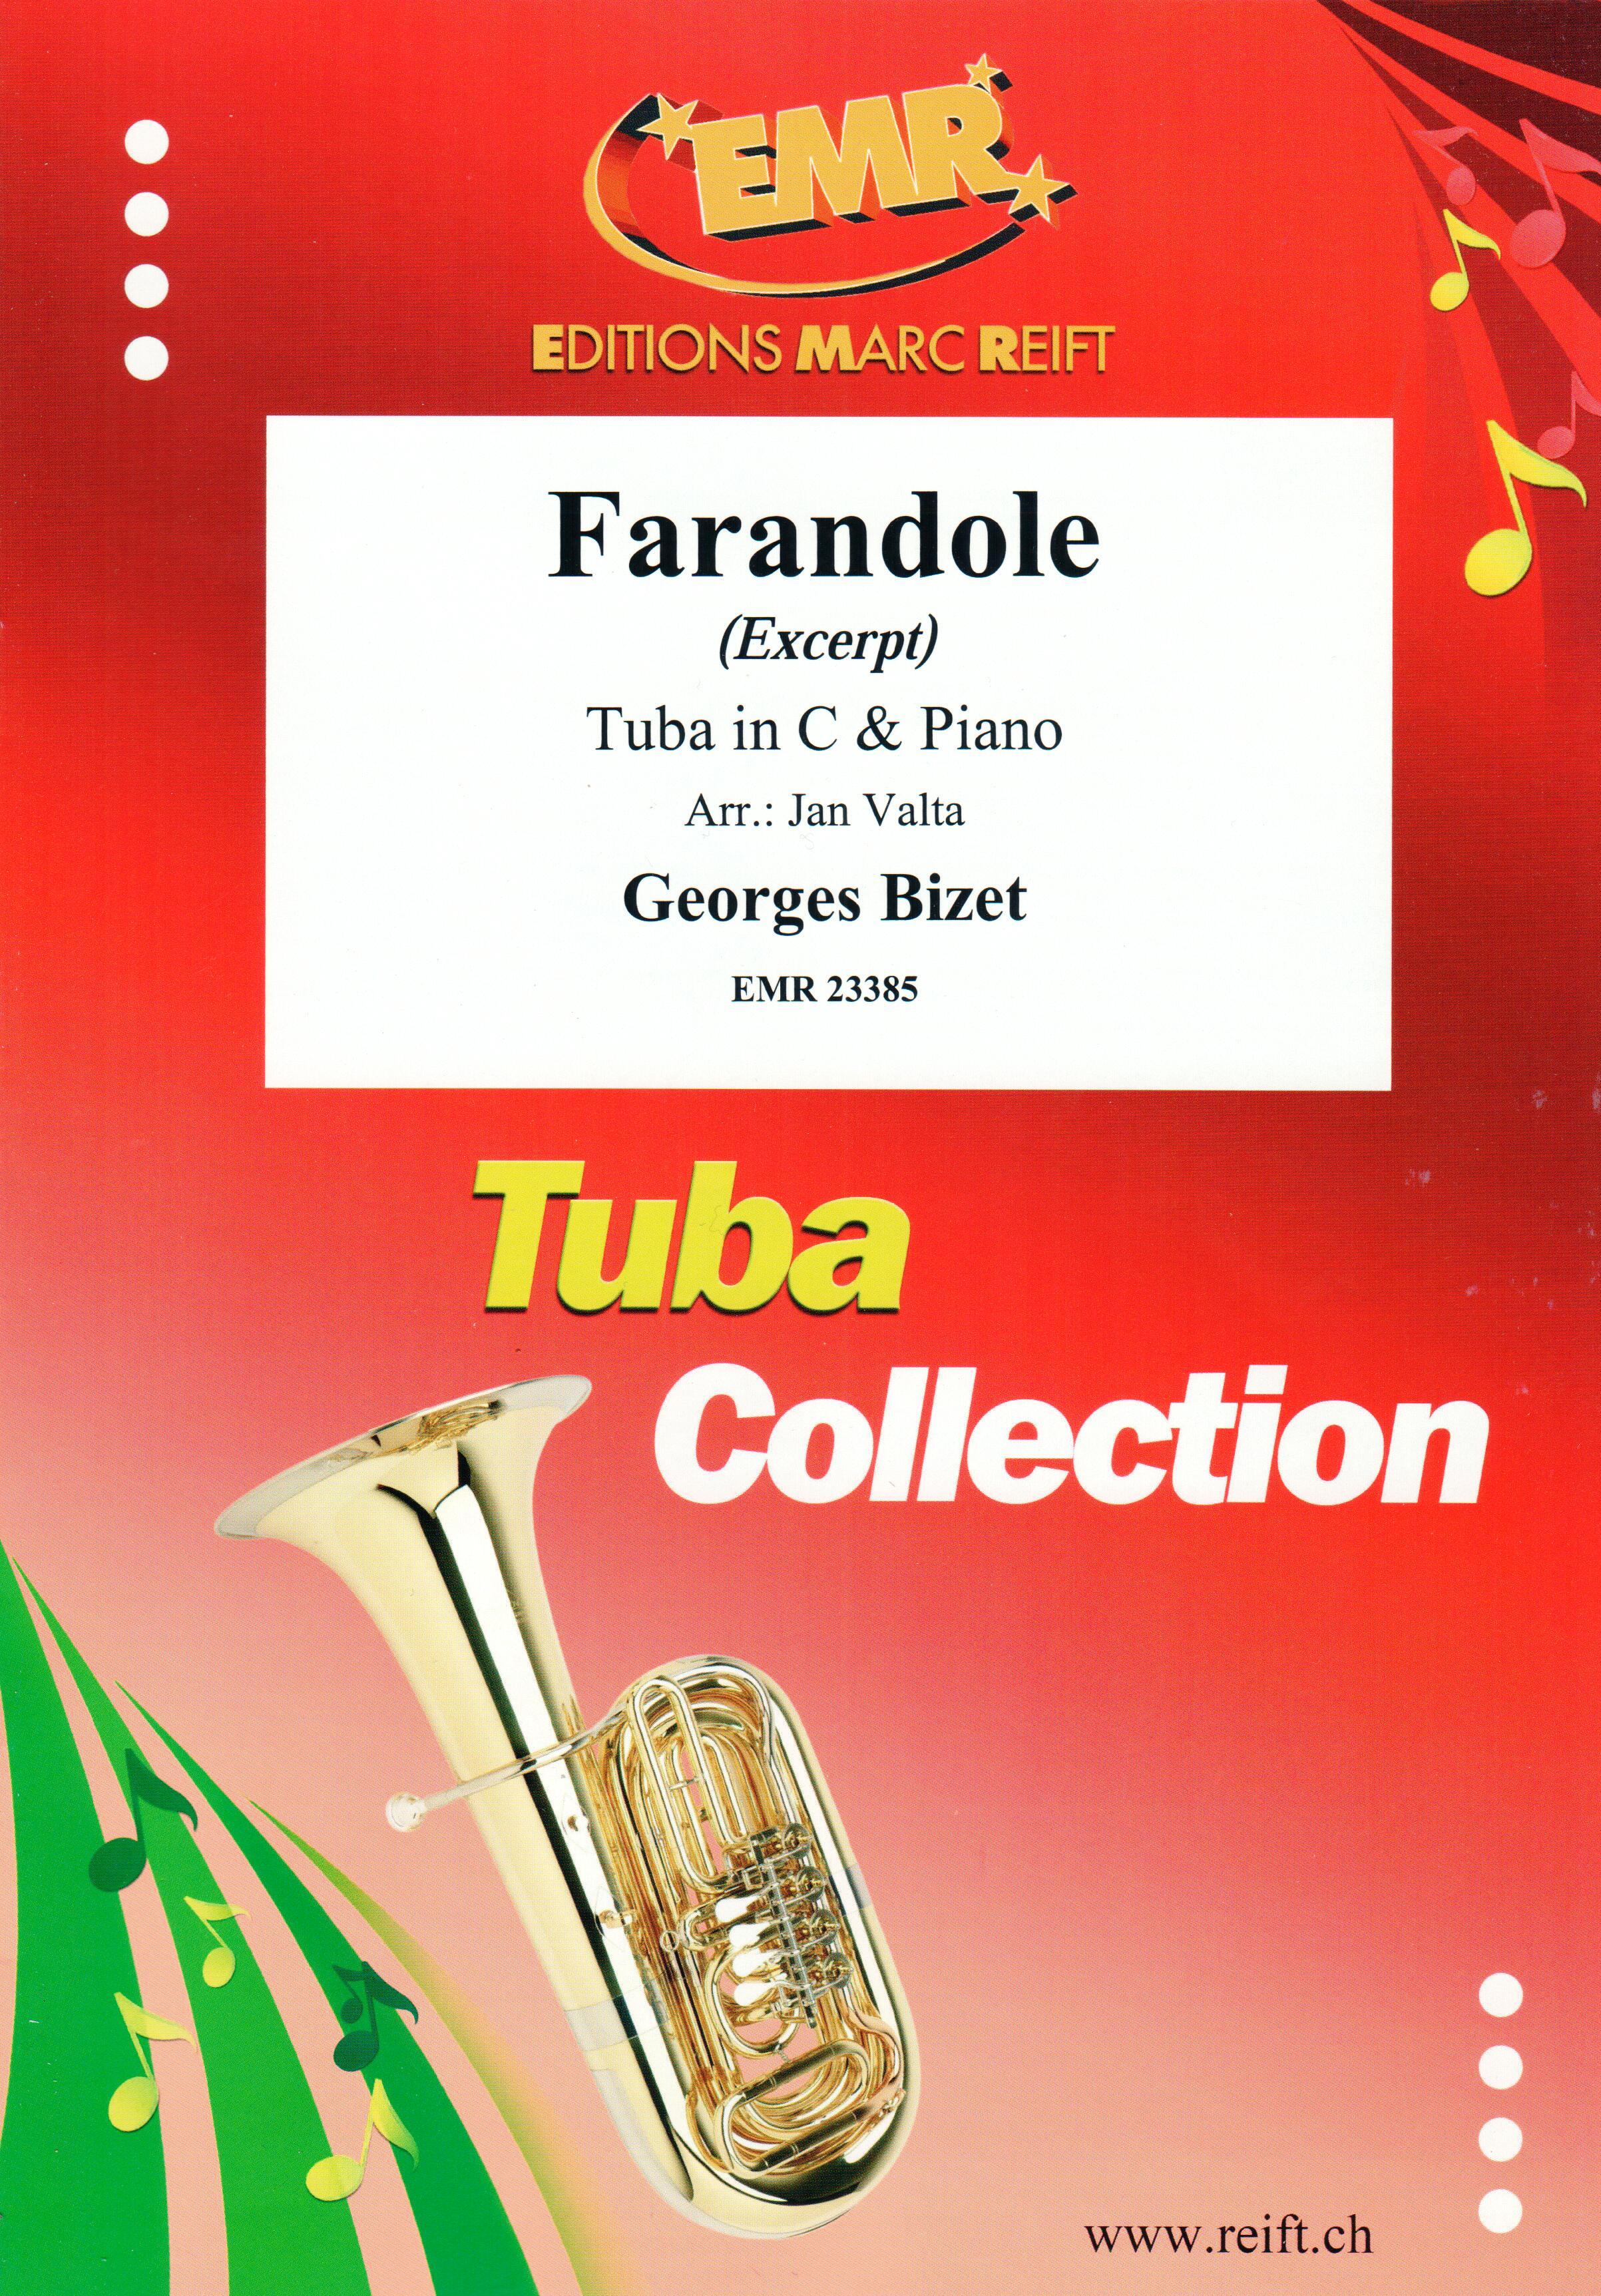 FARANDOLE, SOLOS - E♭. Bass